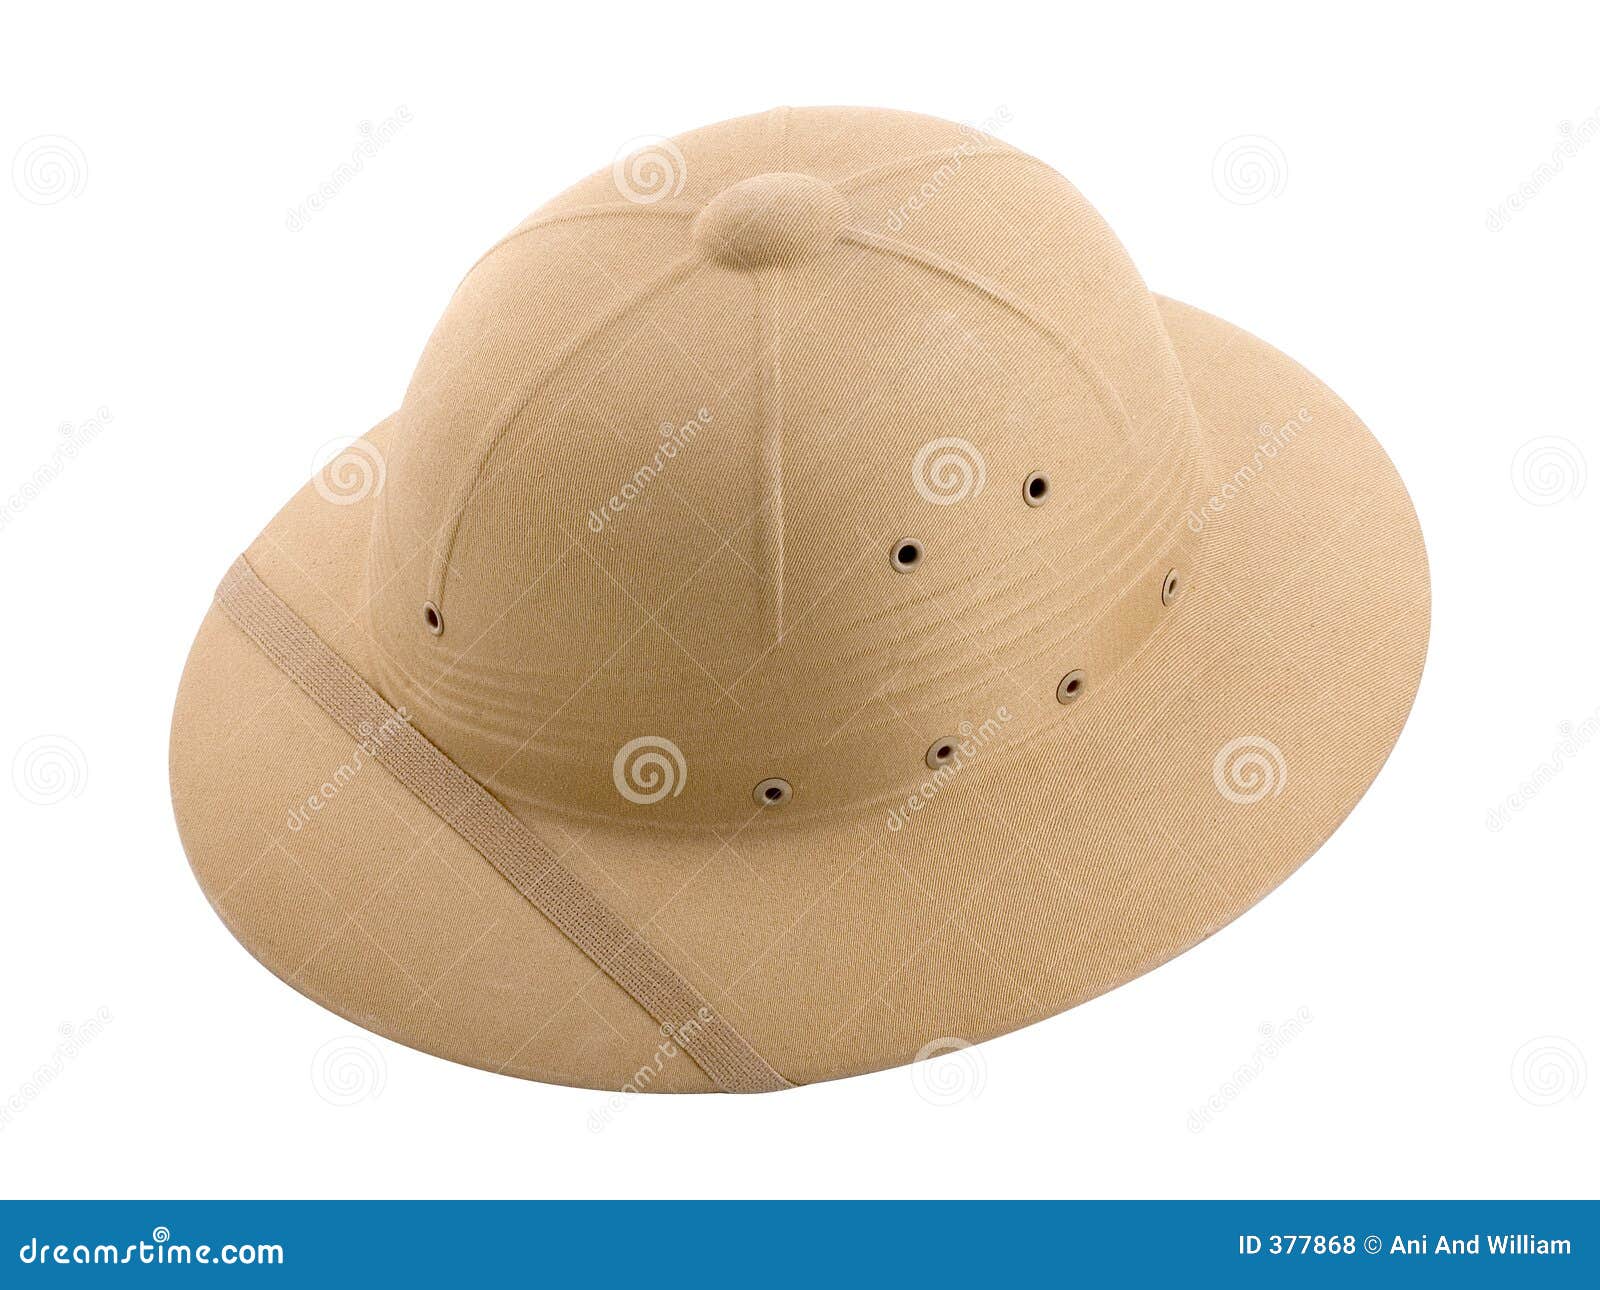 pith-helmet-1-377868.jpg